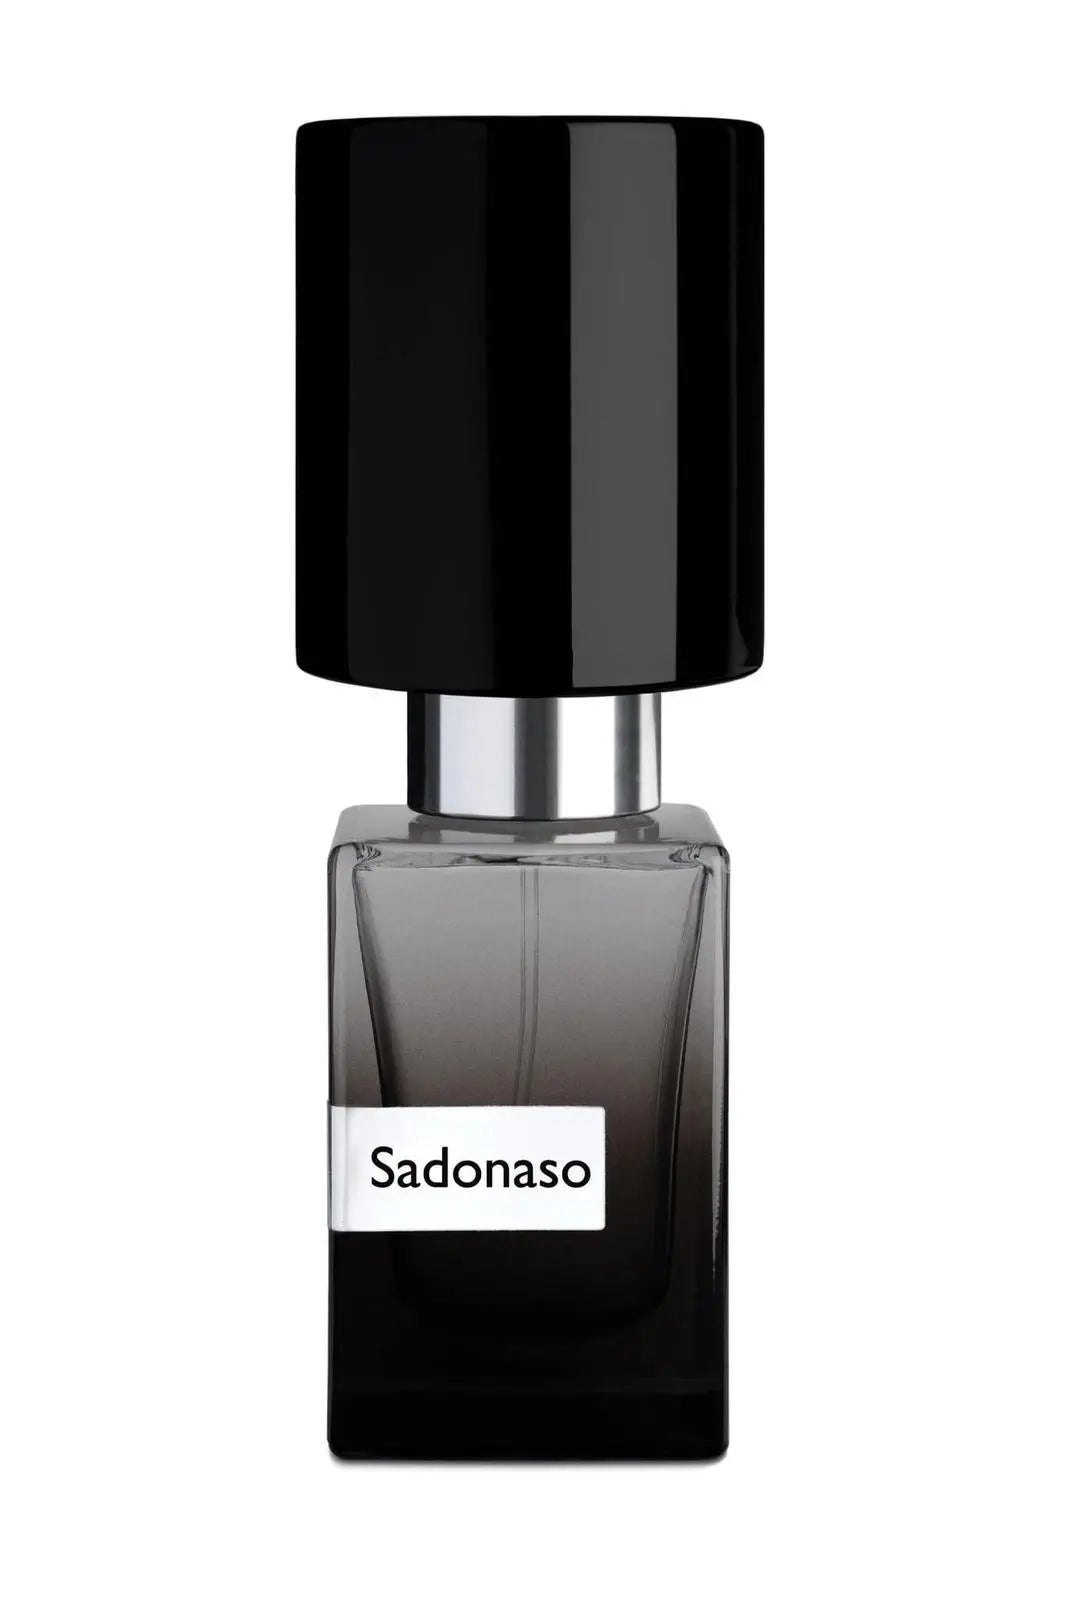 Extrait de parfum SADONASO Nasomatto - 30 ml Edition limitée (Cap)